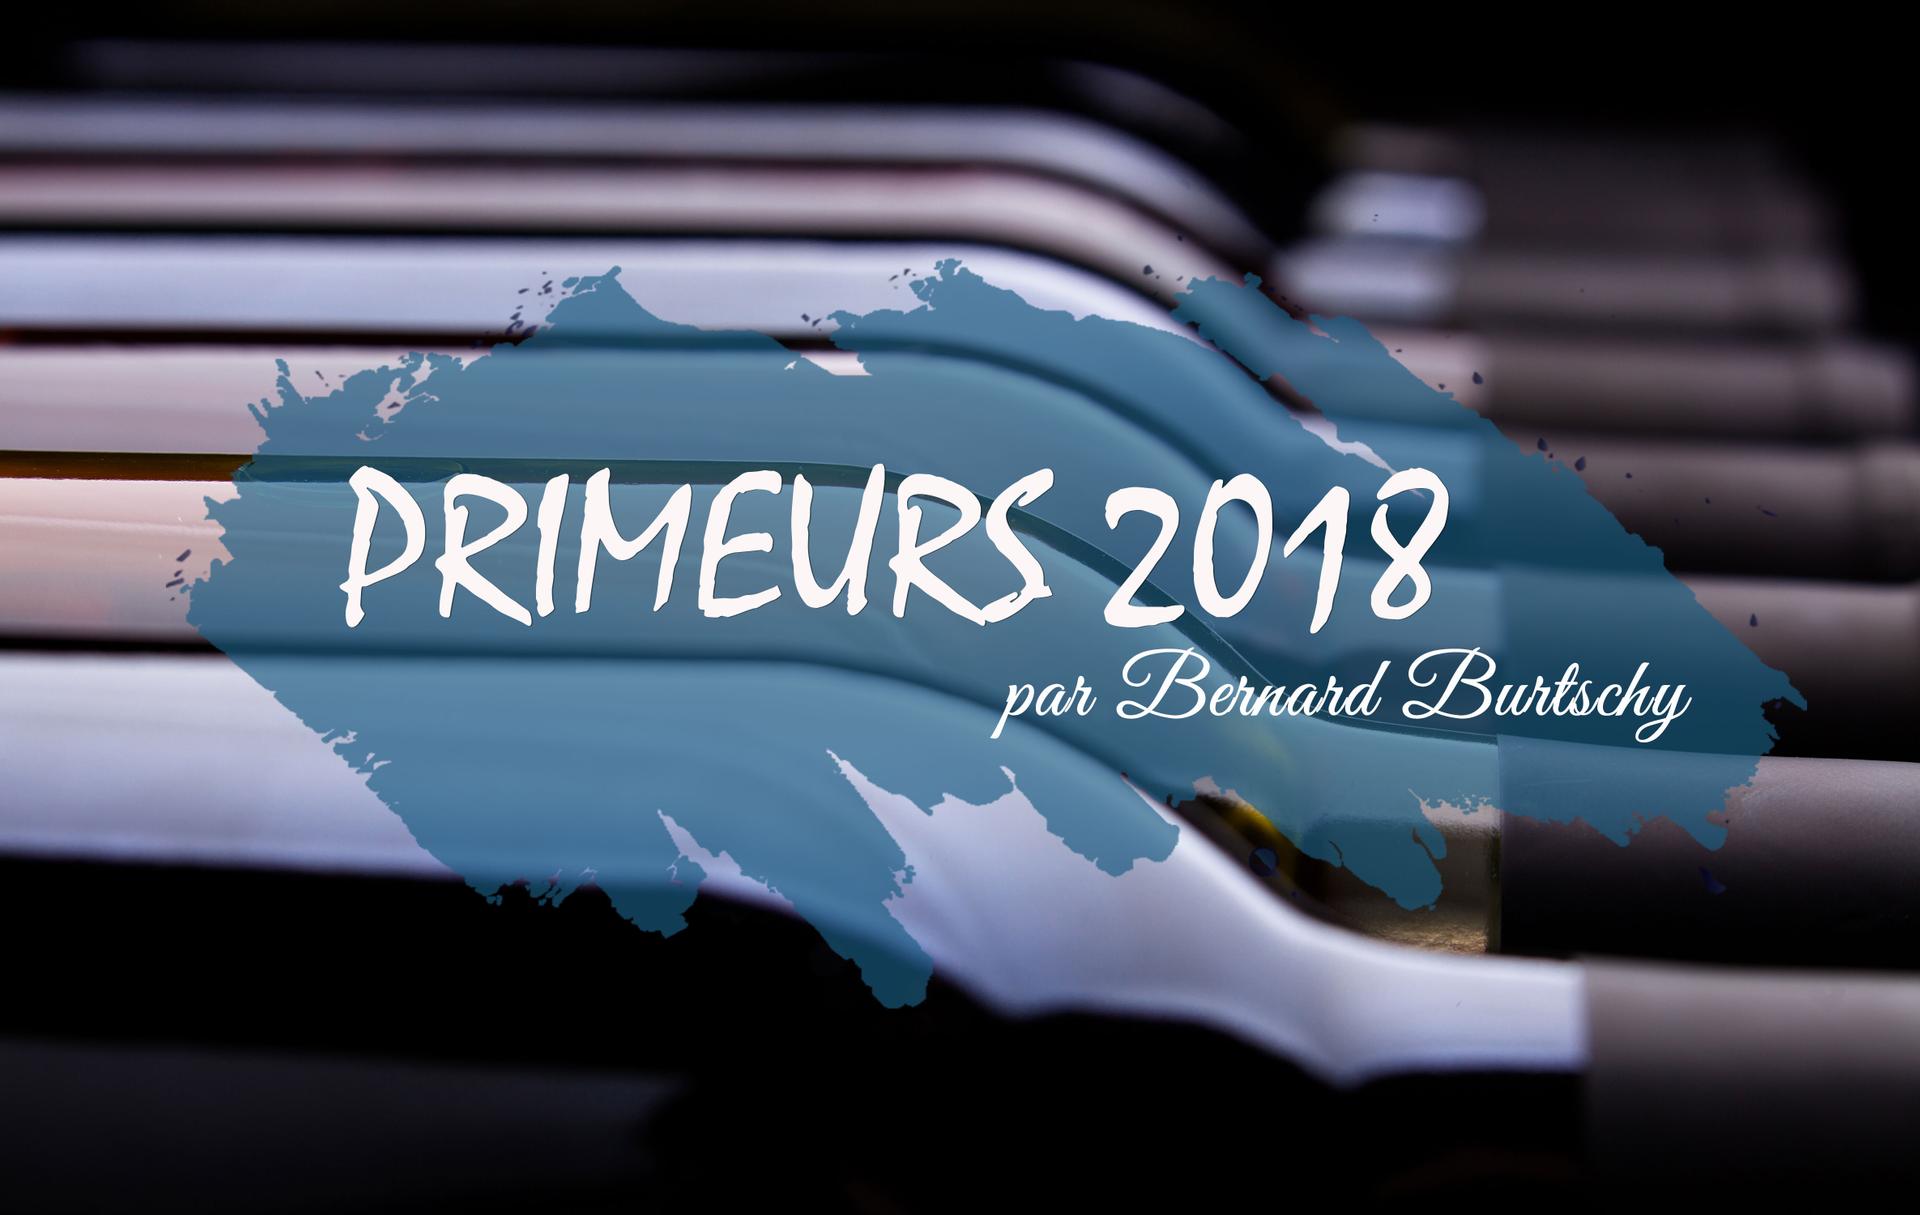 Bordeaux - Primeurs 2018 par Bernard Burtschy